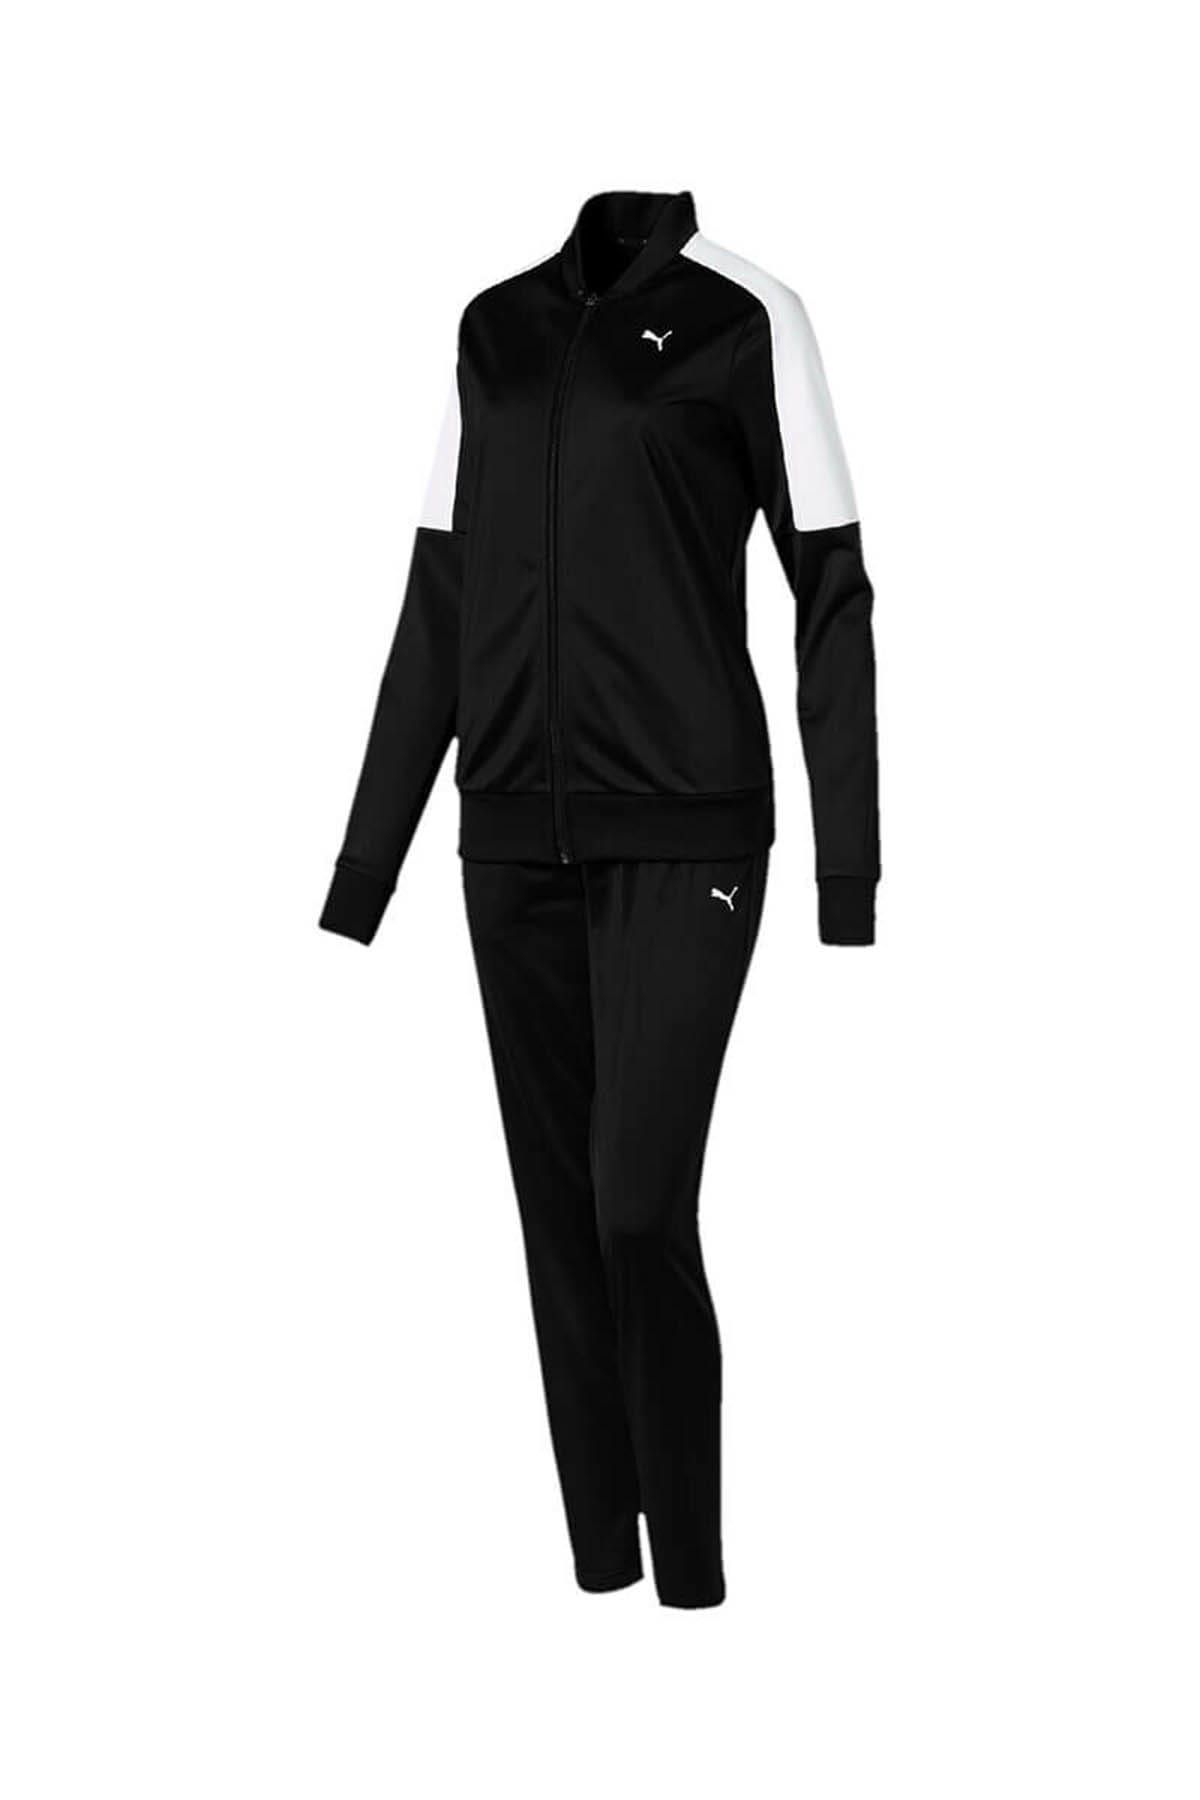 Puma Kadın Eşofman Takımı Clean Tricot Suit - 85409701